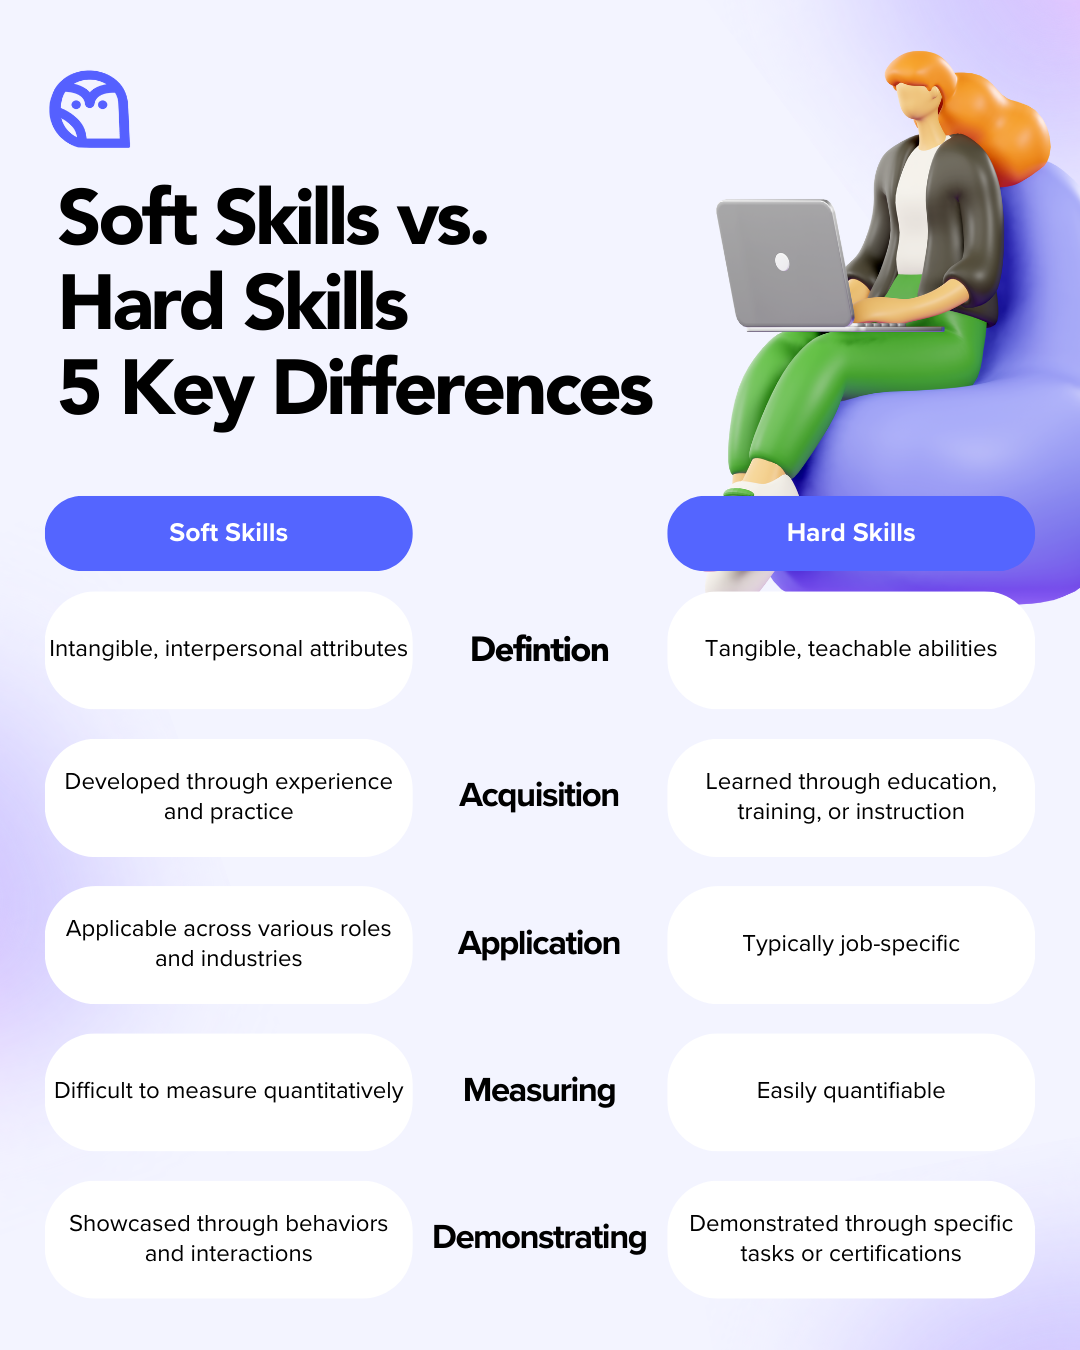 Soft Skills vs. Hard Skills: The Differences